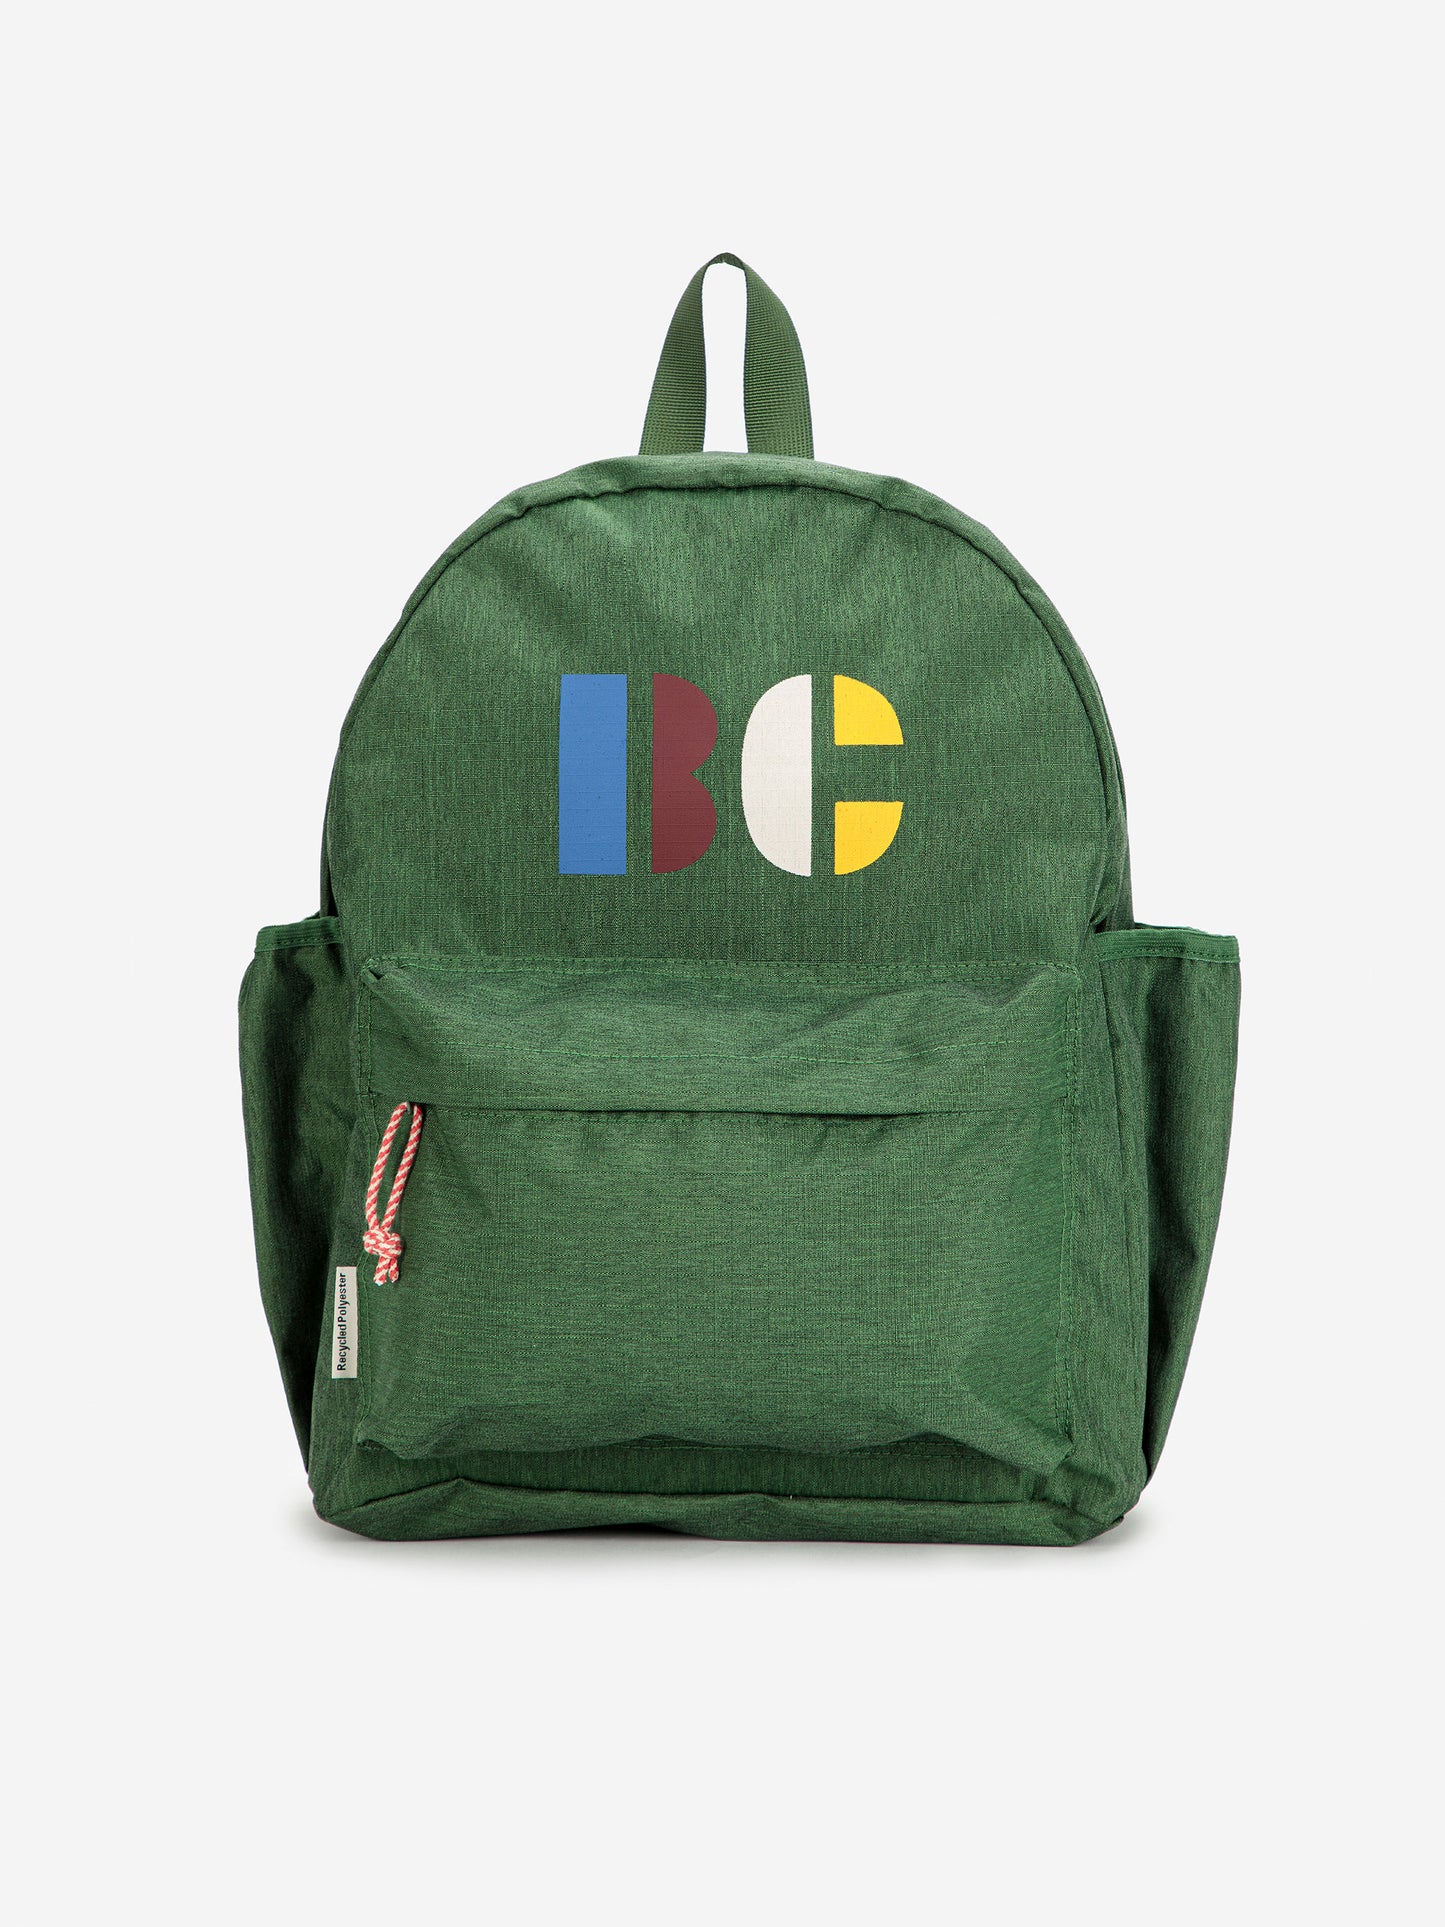 BC Khaki backpack